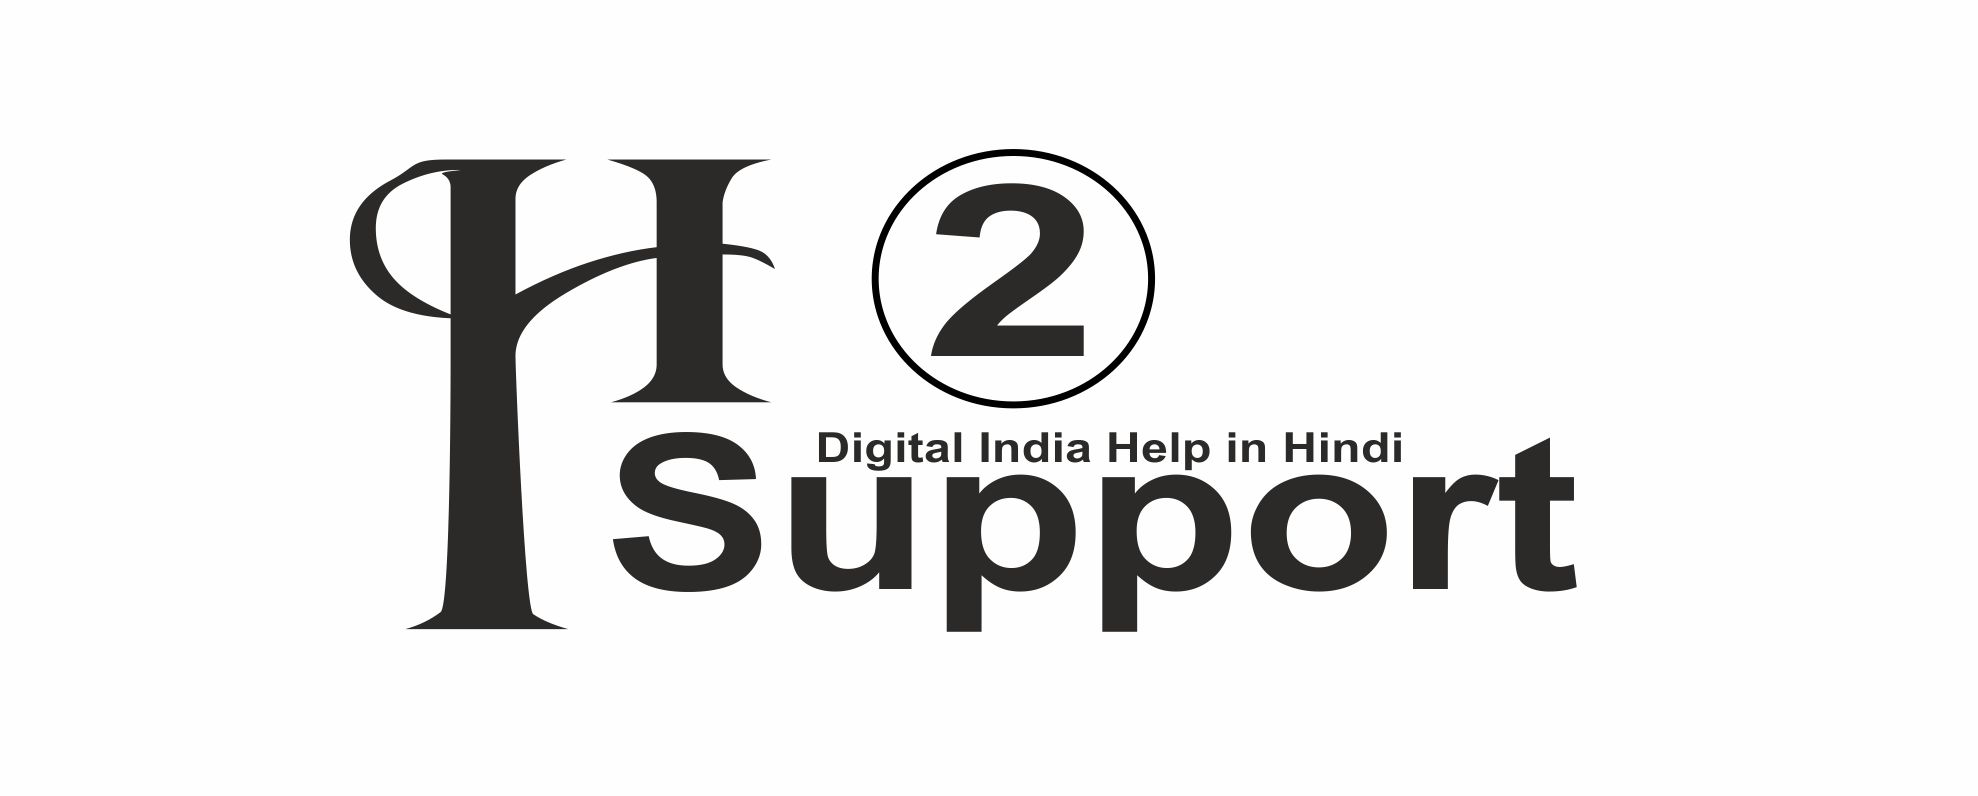 Digital India Help in Hindi